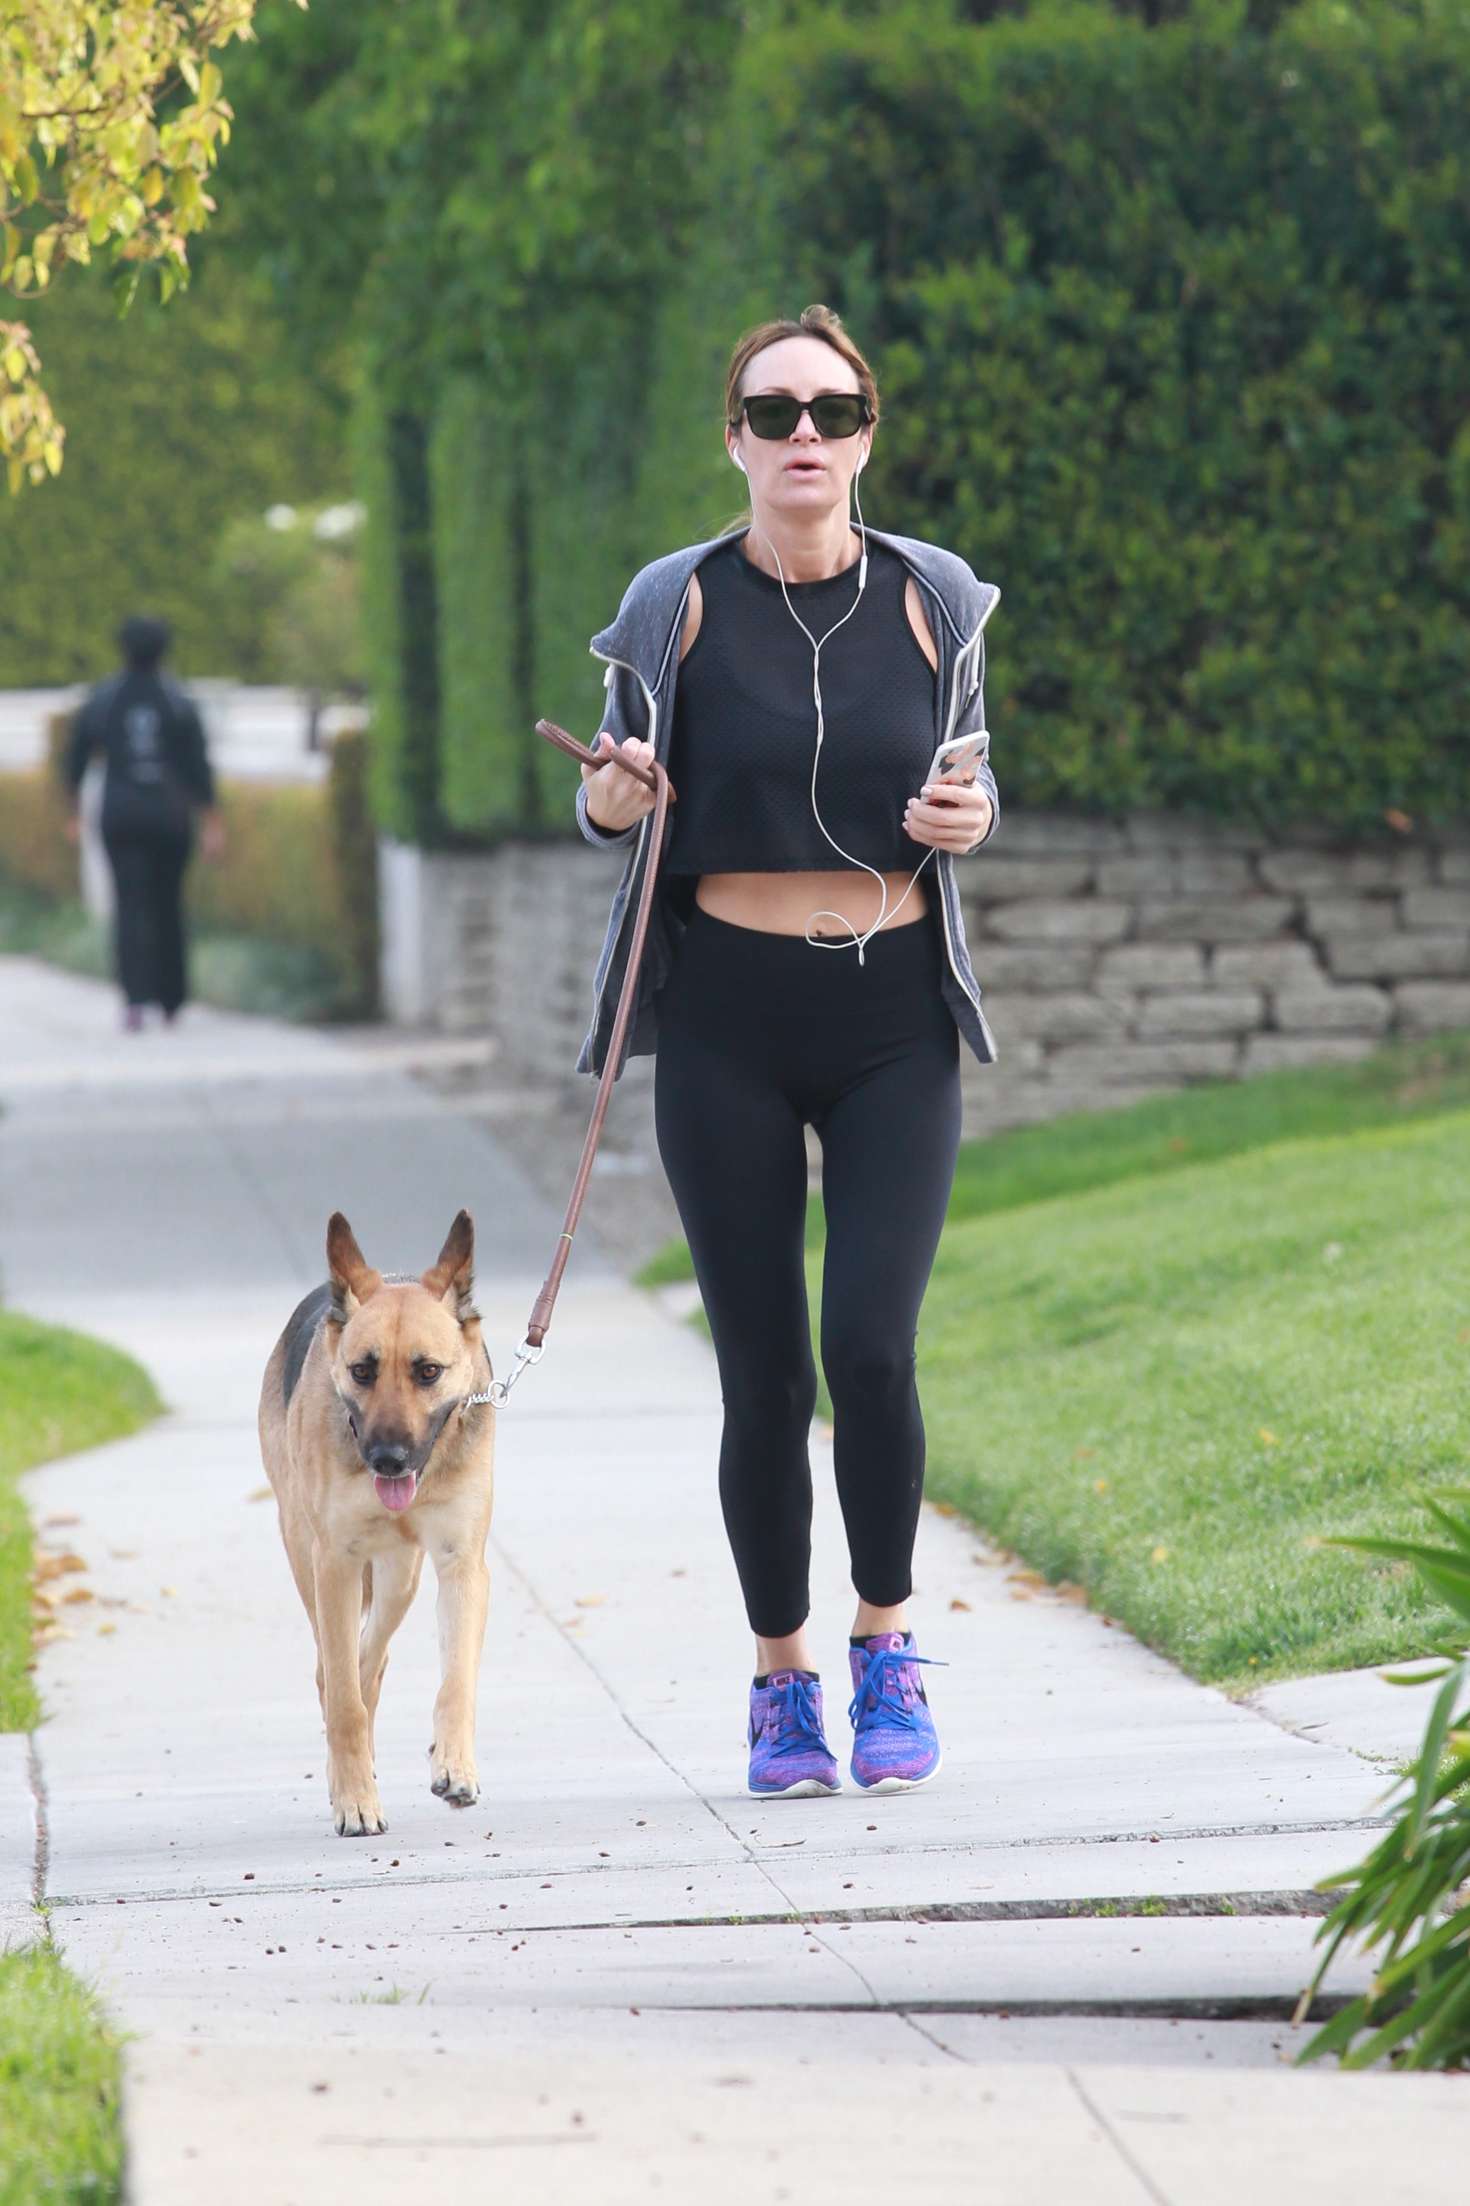 Catt Sadler – Jogging with her dog in Los Angeles – GotCeleb